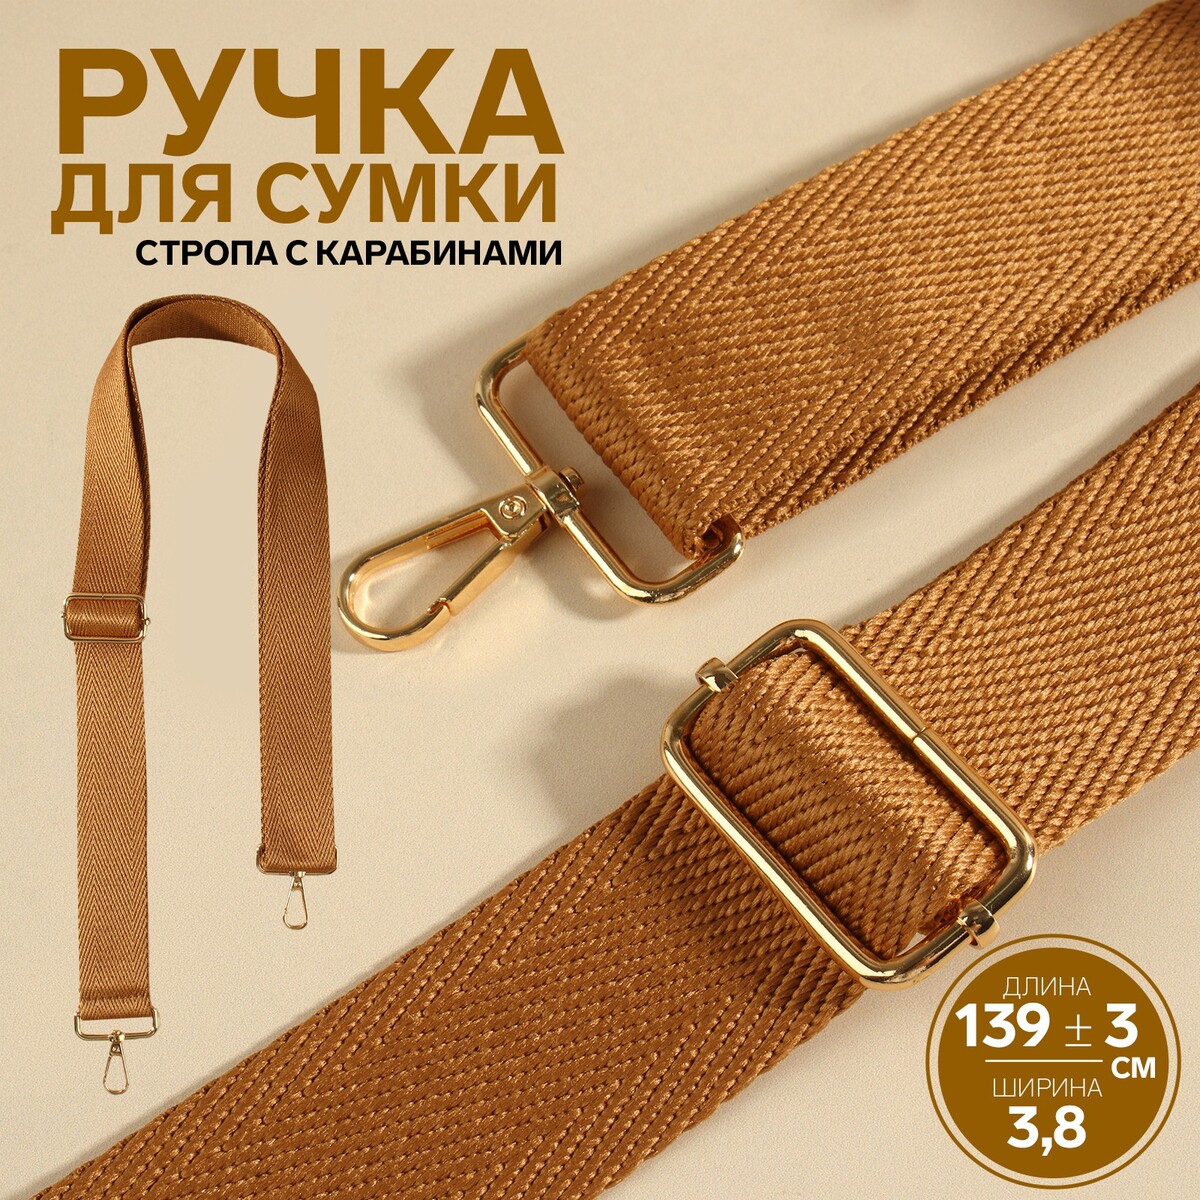 Ручка для сумки, стропа, с карабинами, 139 ± 3 × 3,8 см, цвет светло-коричневый ручка для сумки с карабинами 60 ± 1 см × 2 см светло коричневый